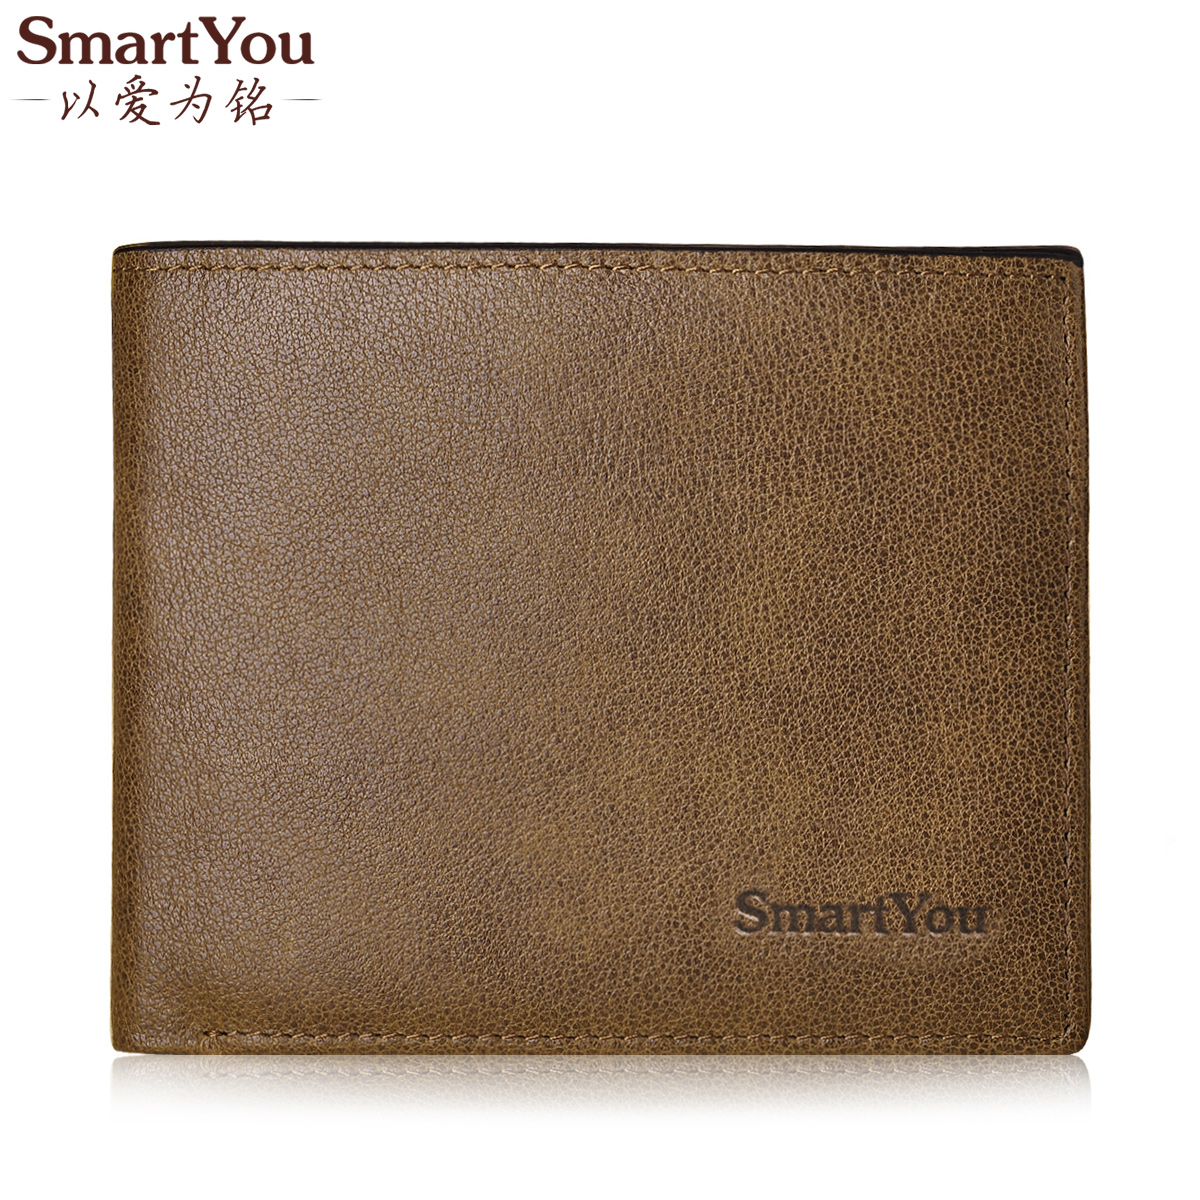 2014 Smartyou male wallet male genuine leather vintage men's lovers short design cowhide wallet two-color lettering